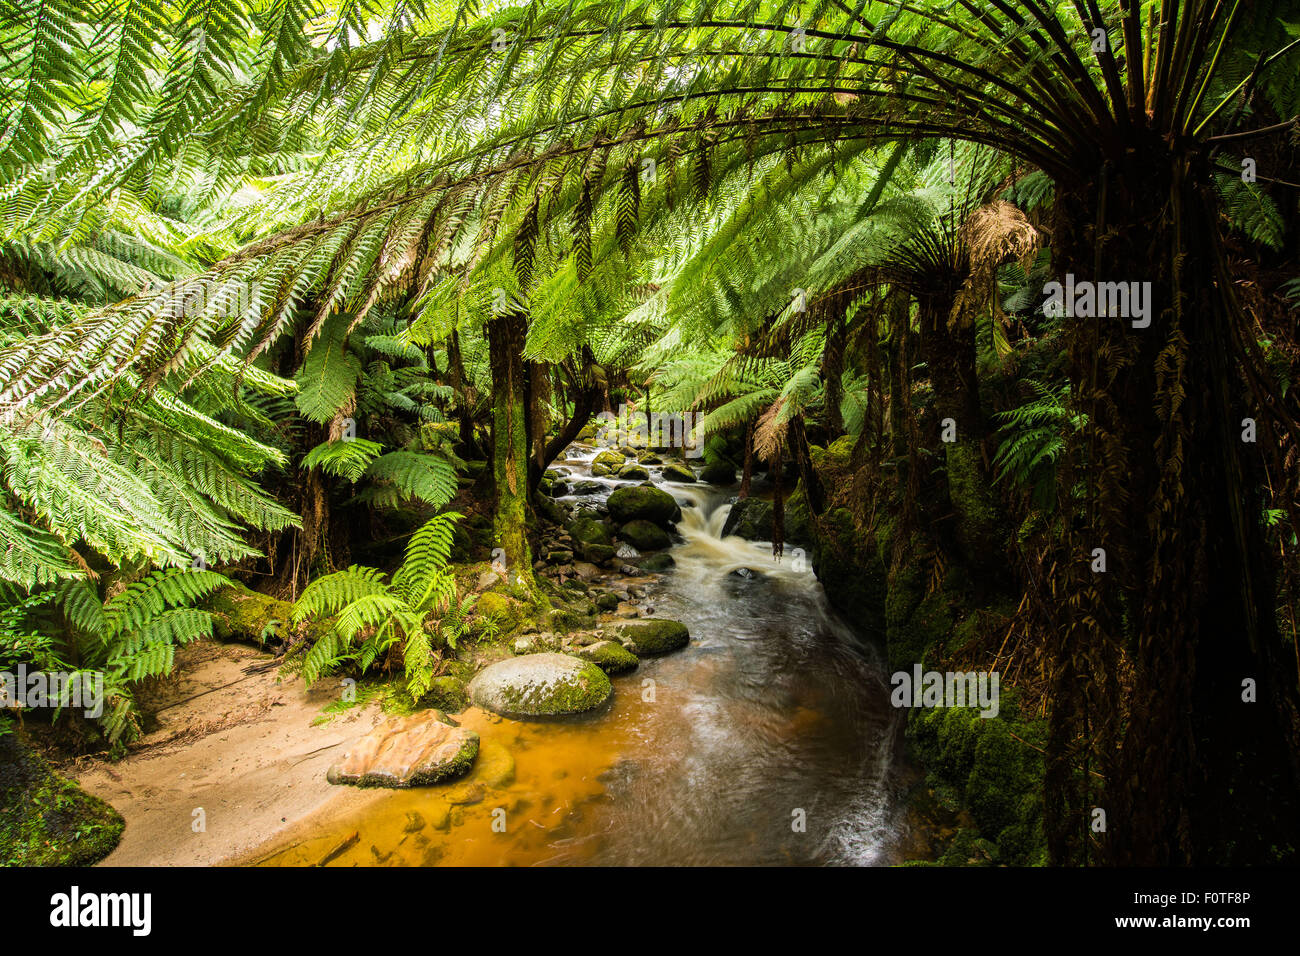 Stream & tree ferns, St. Columba Falls Reserve, Tasmania Stock Photo